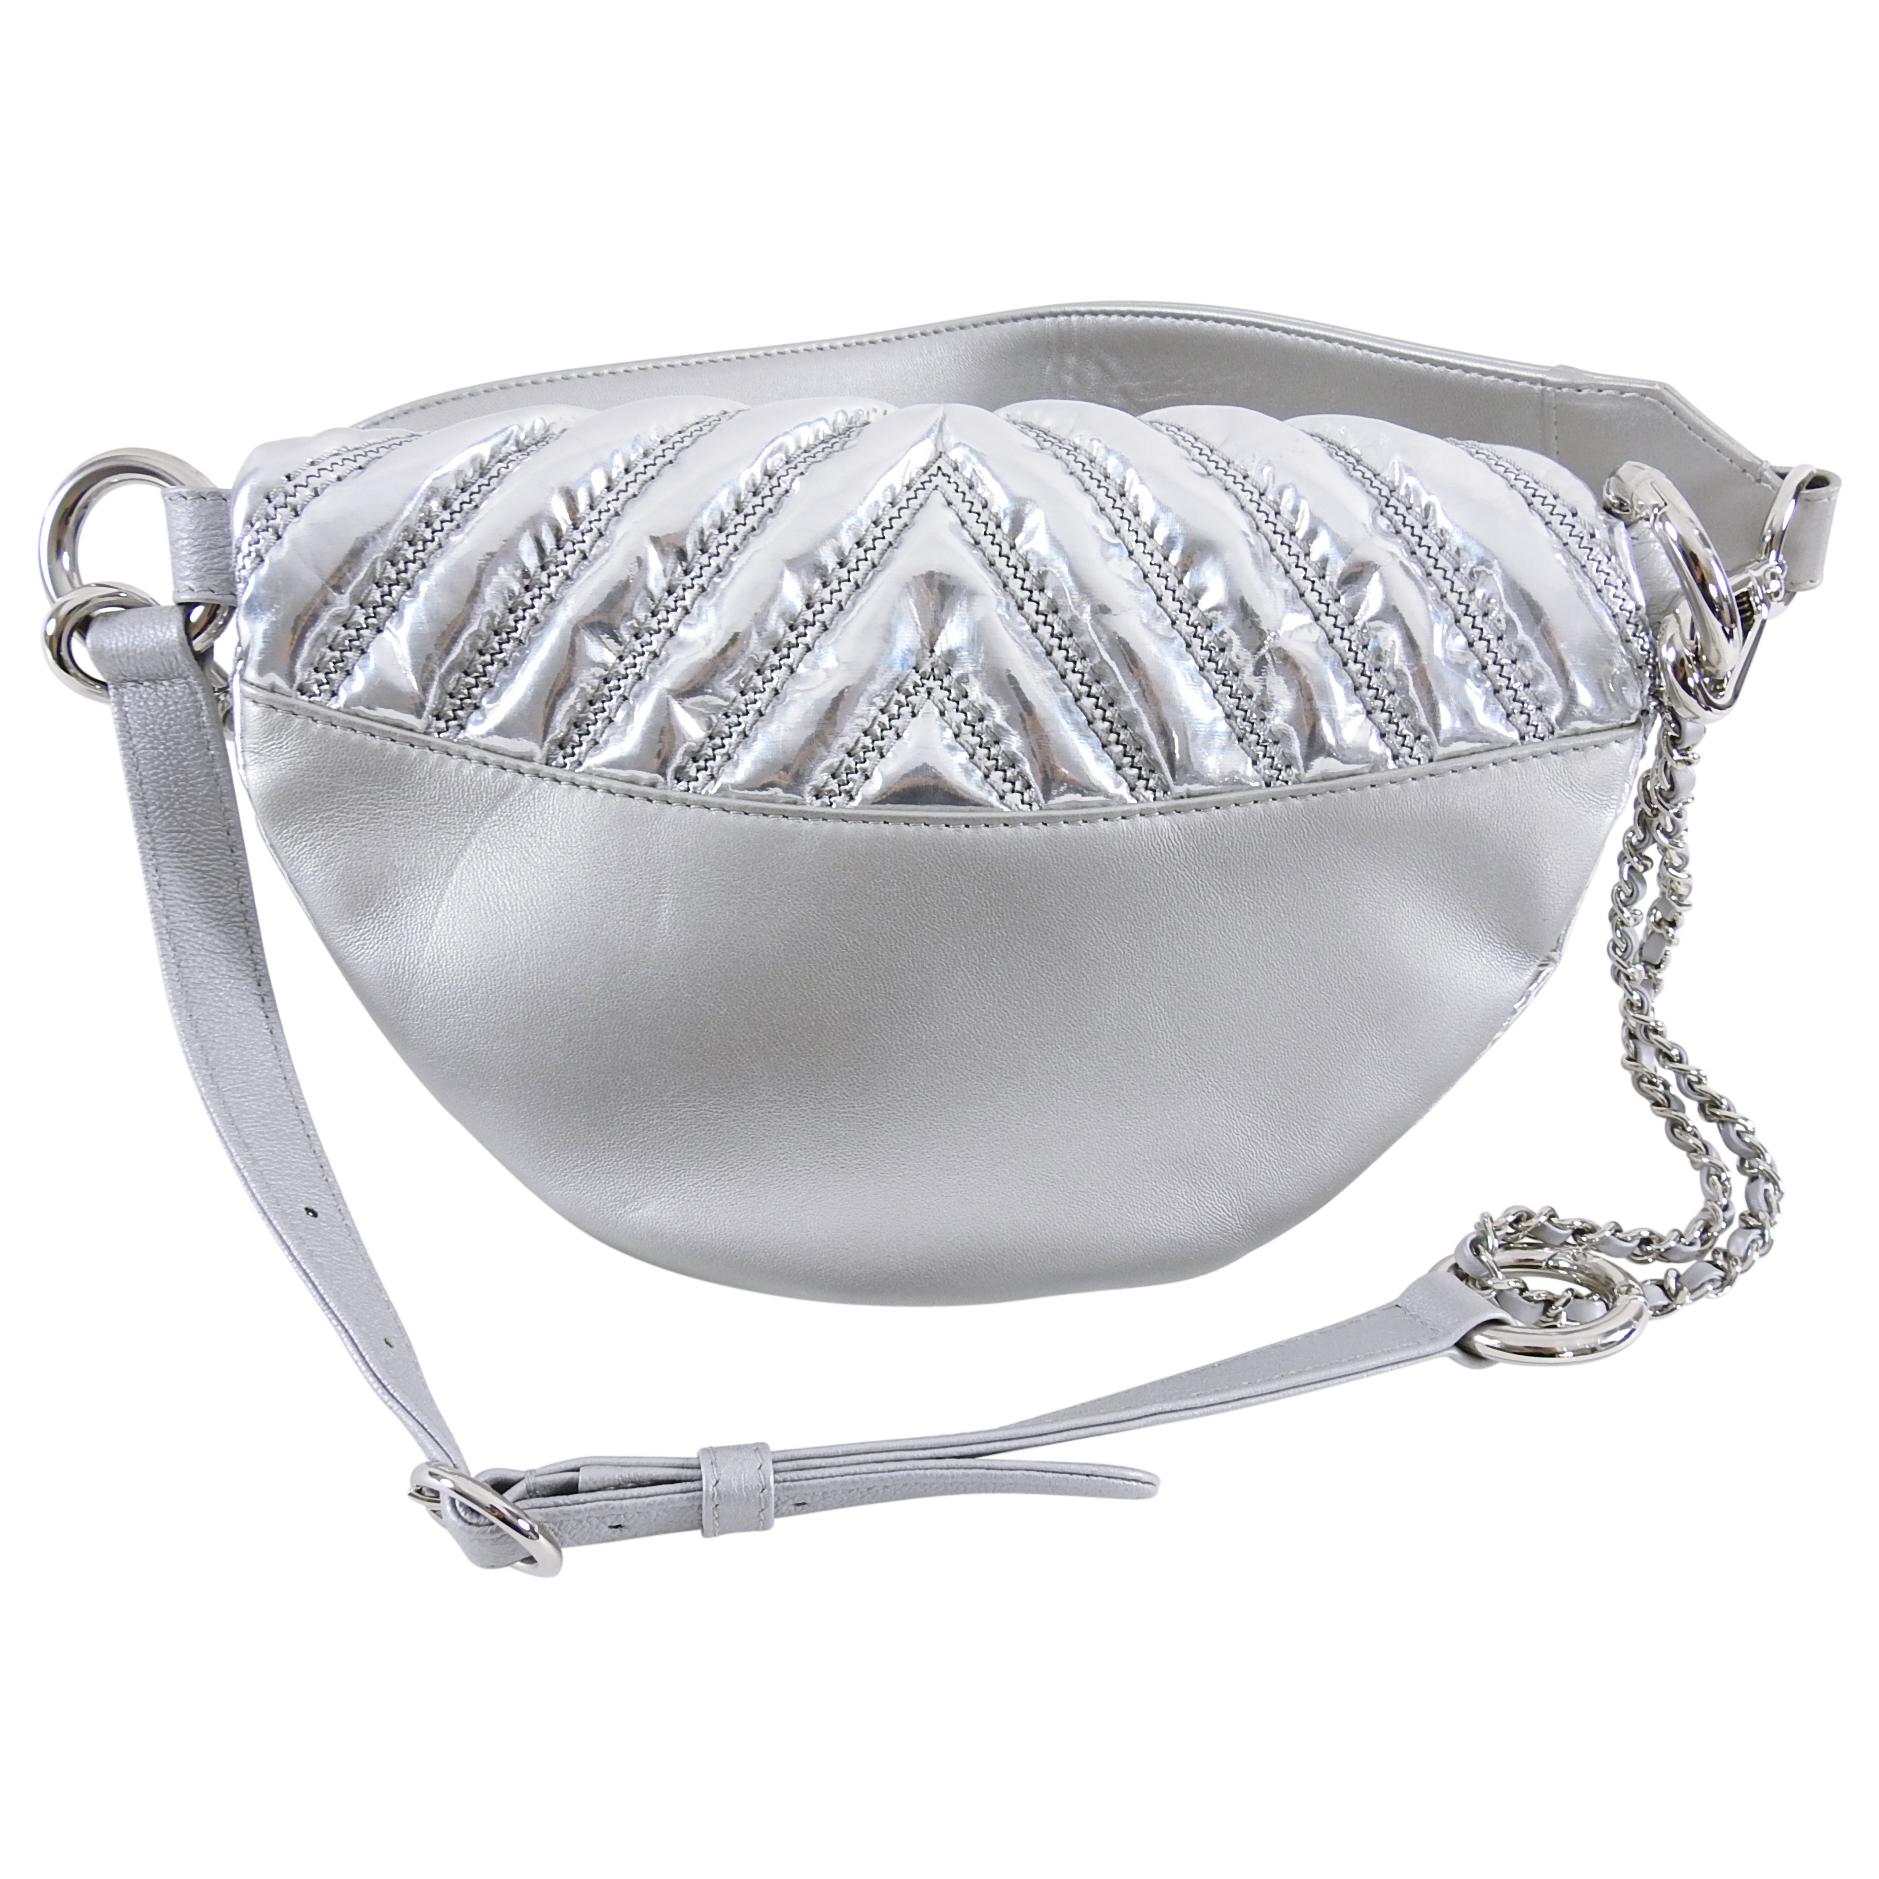 Chanel Fall 2017 Silver Metallic Space Belt Bag Fanny Pack 1